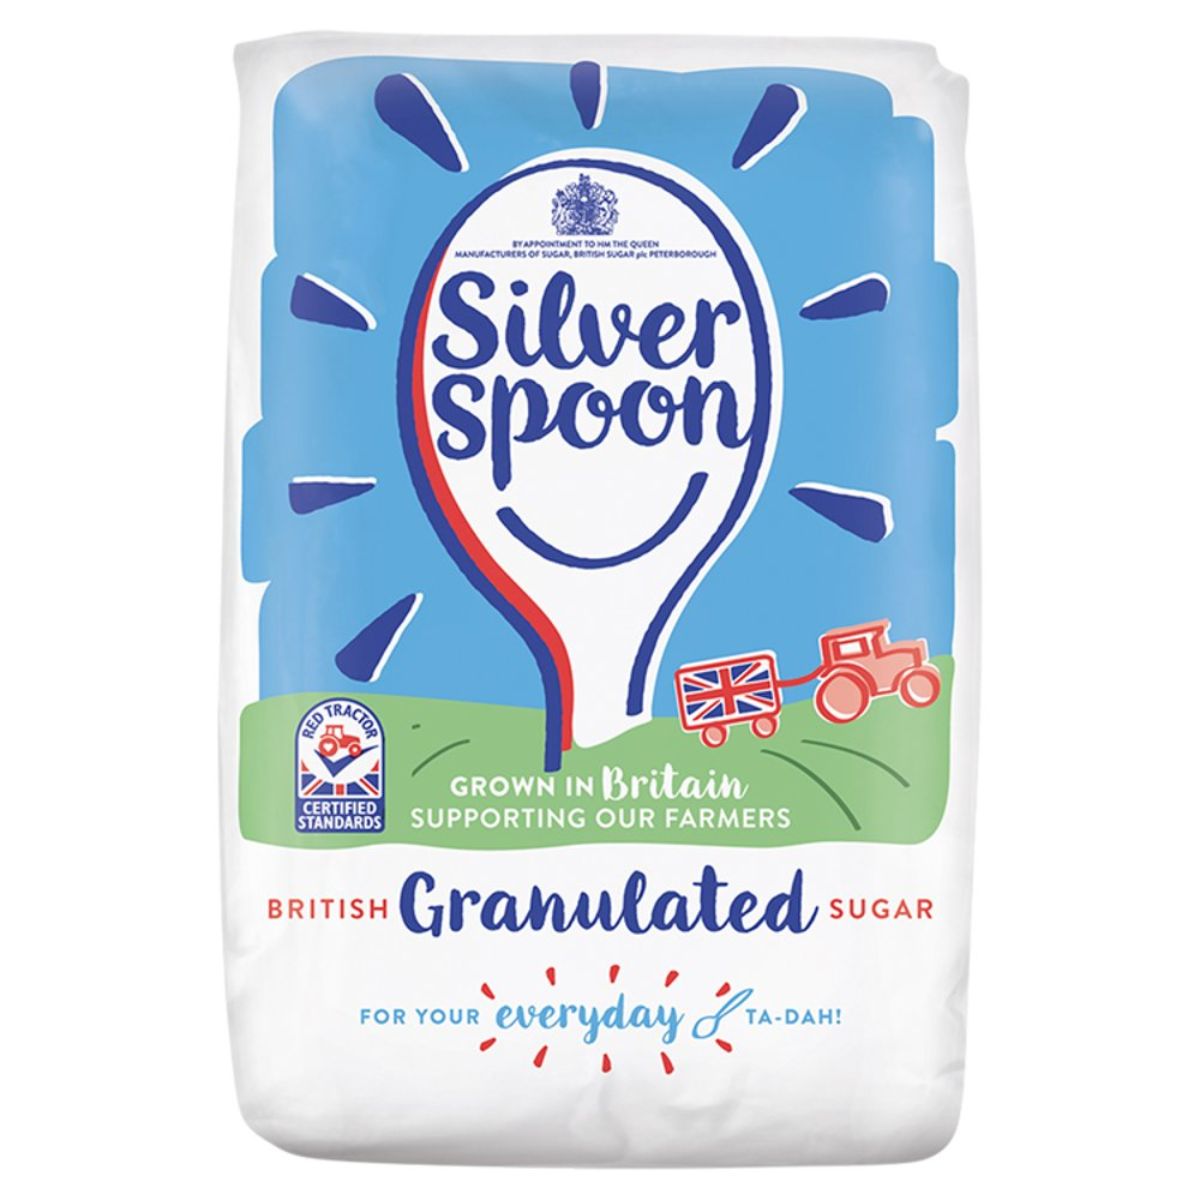 Silver Spoon - British Granulated Sugar - 1kg granulated sugar.